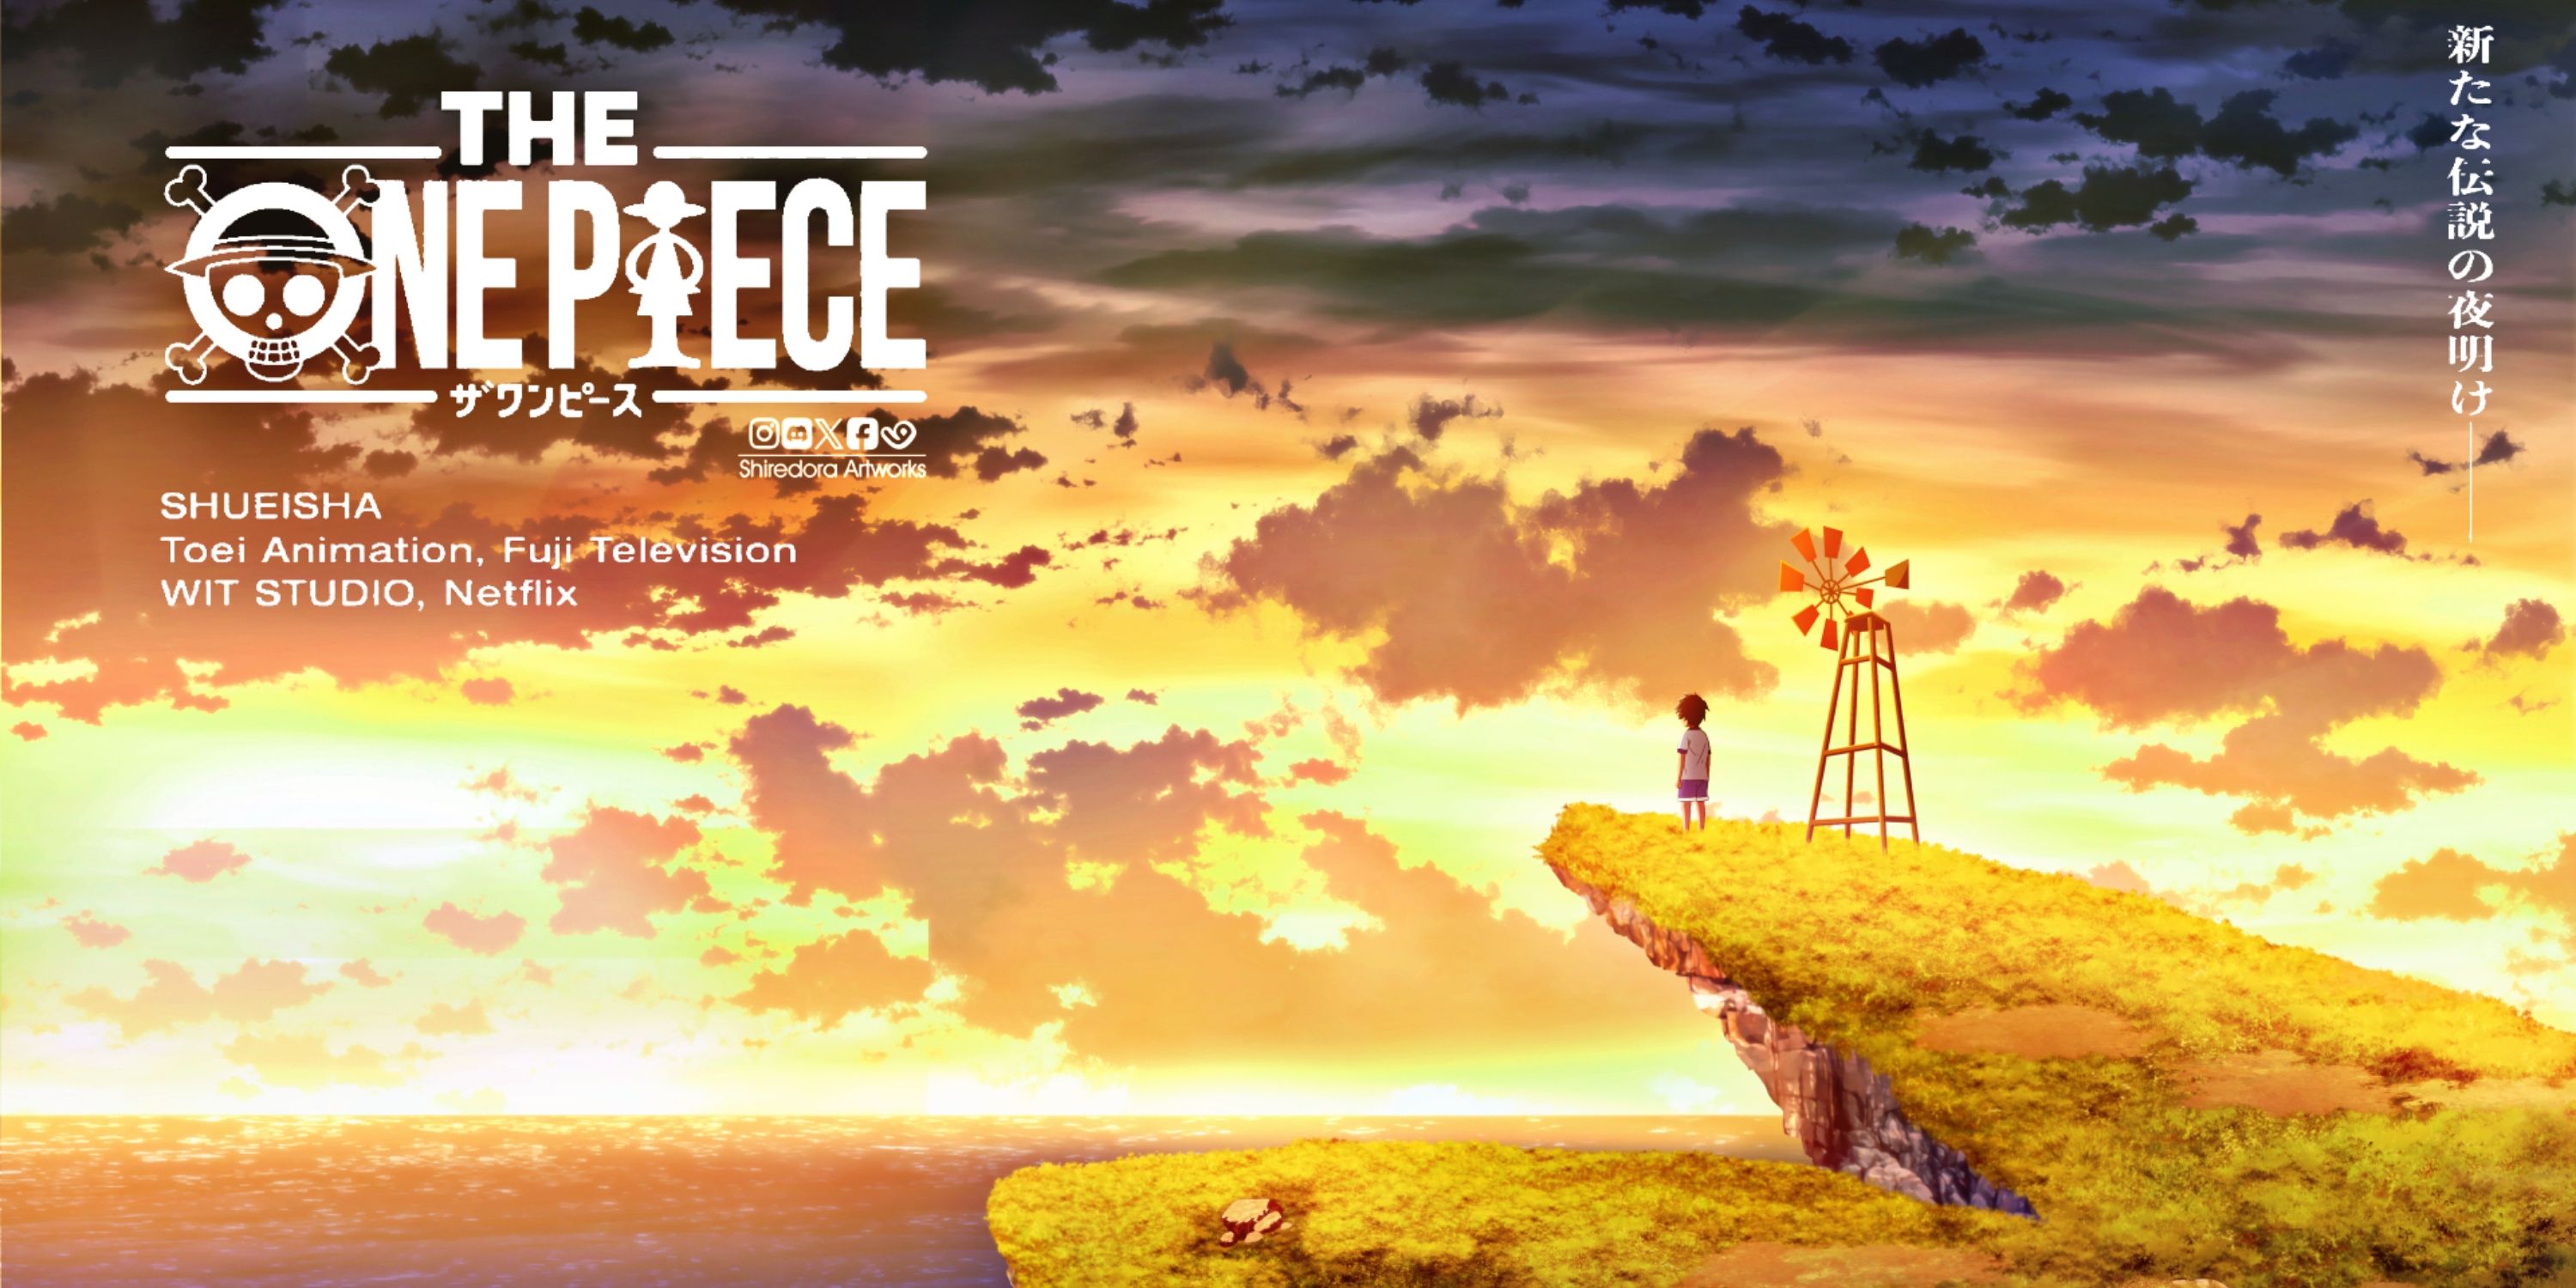 One Piece anime remake